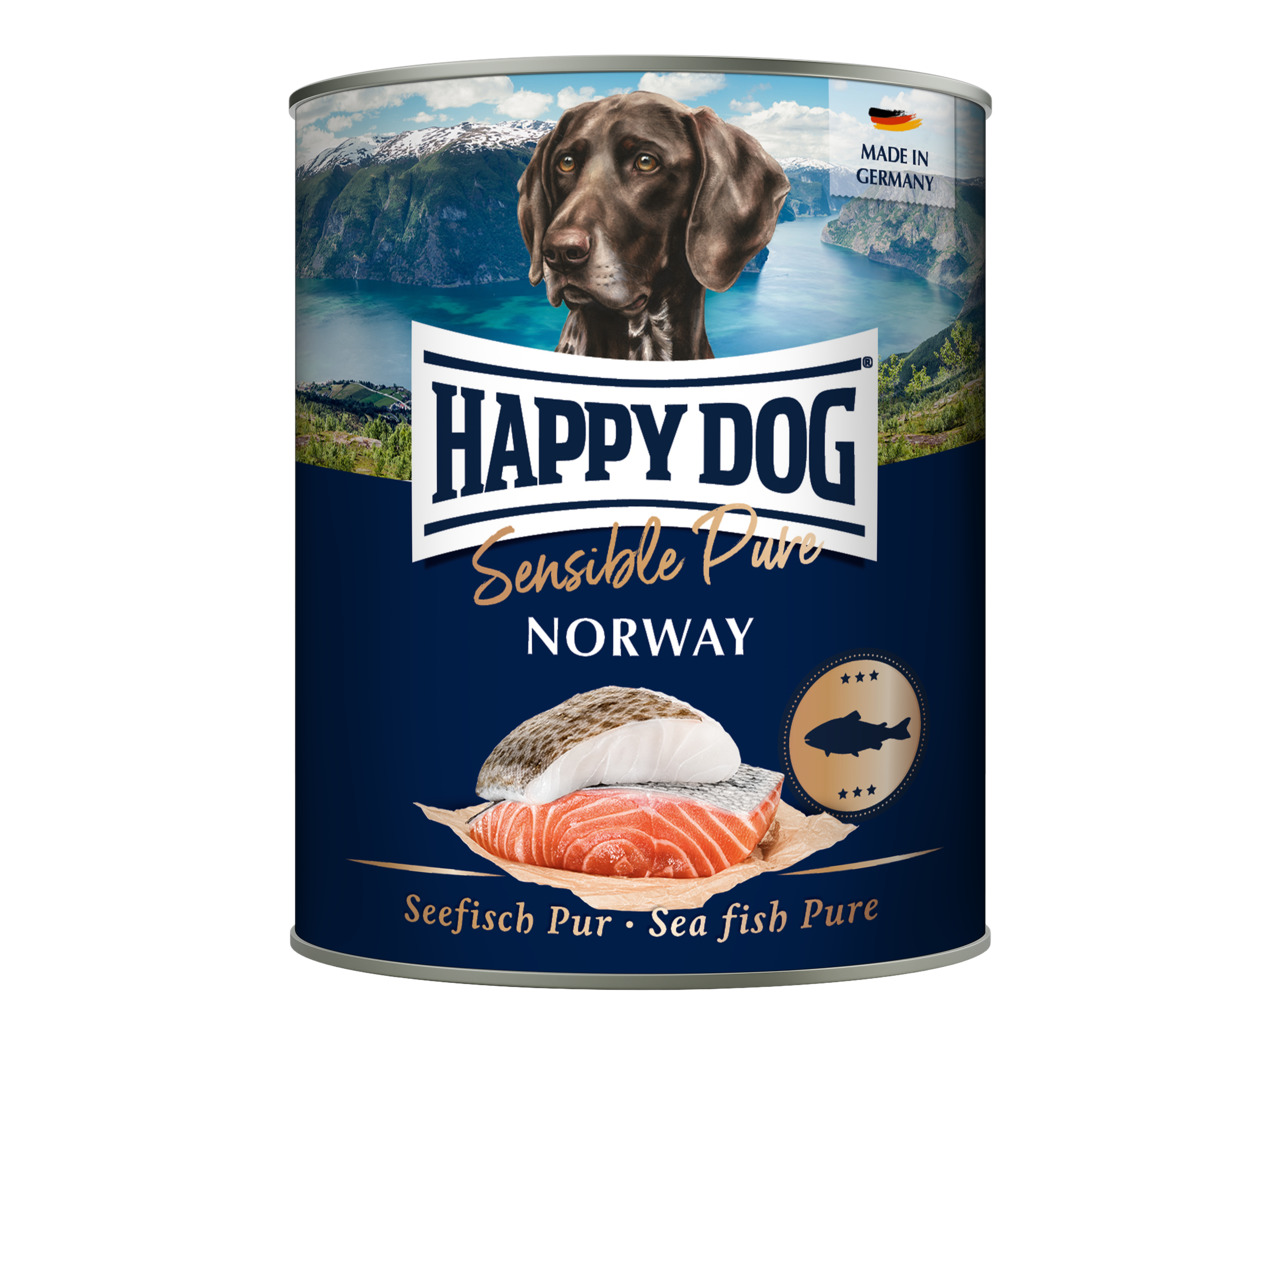 Sparpaket 24 x 800 g Happy Dog Sensible Pure Norway Seefisch Pur Hunde Nassfutter